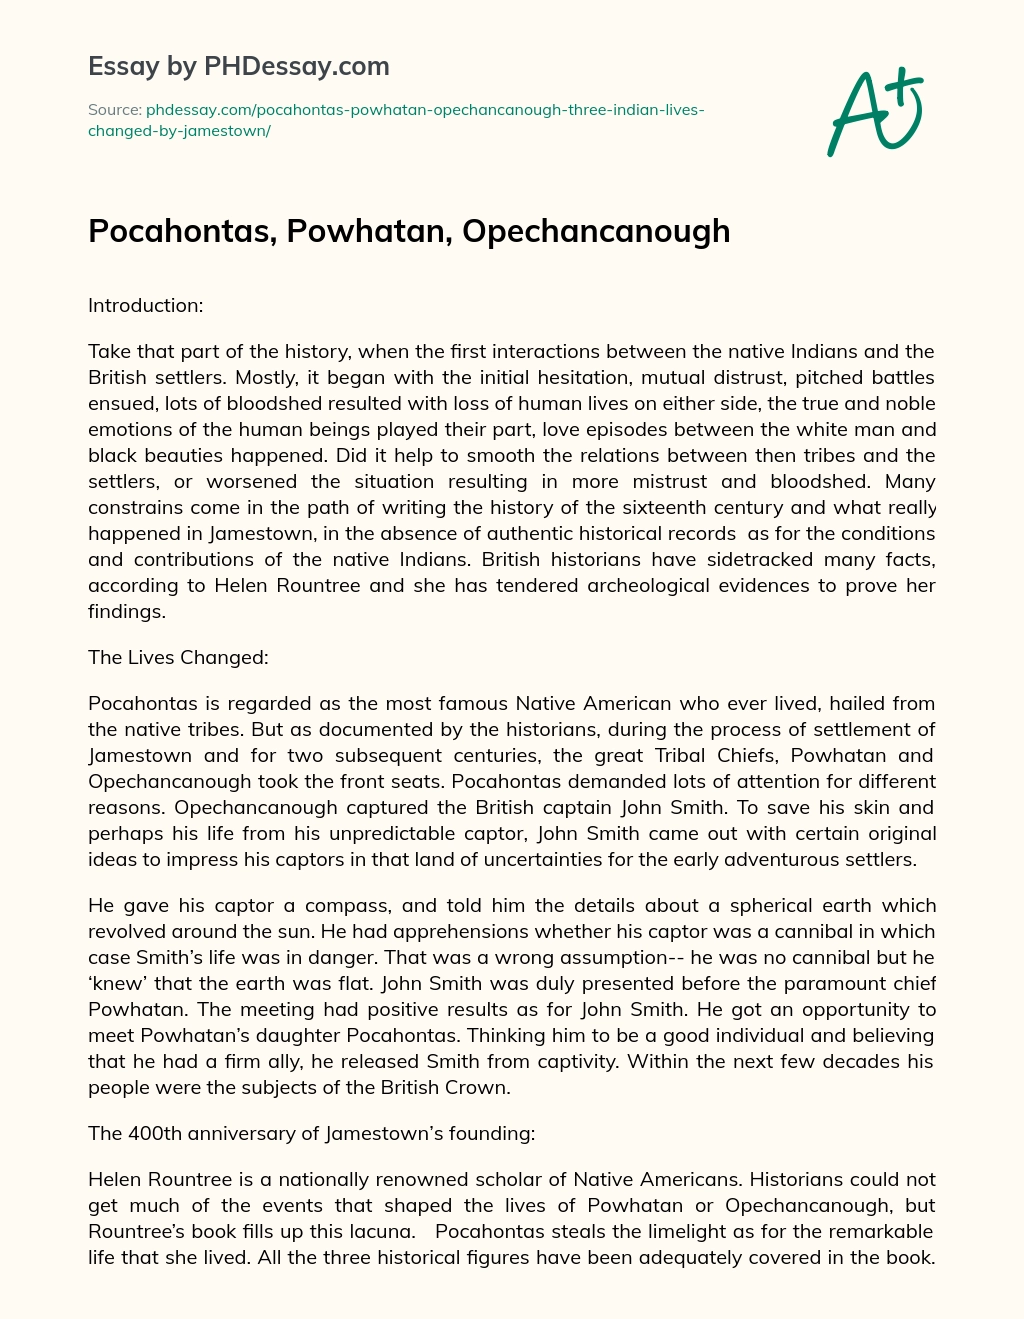 Pocahontas, Powhatan, Opechancanough essay